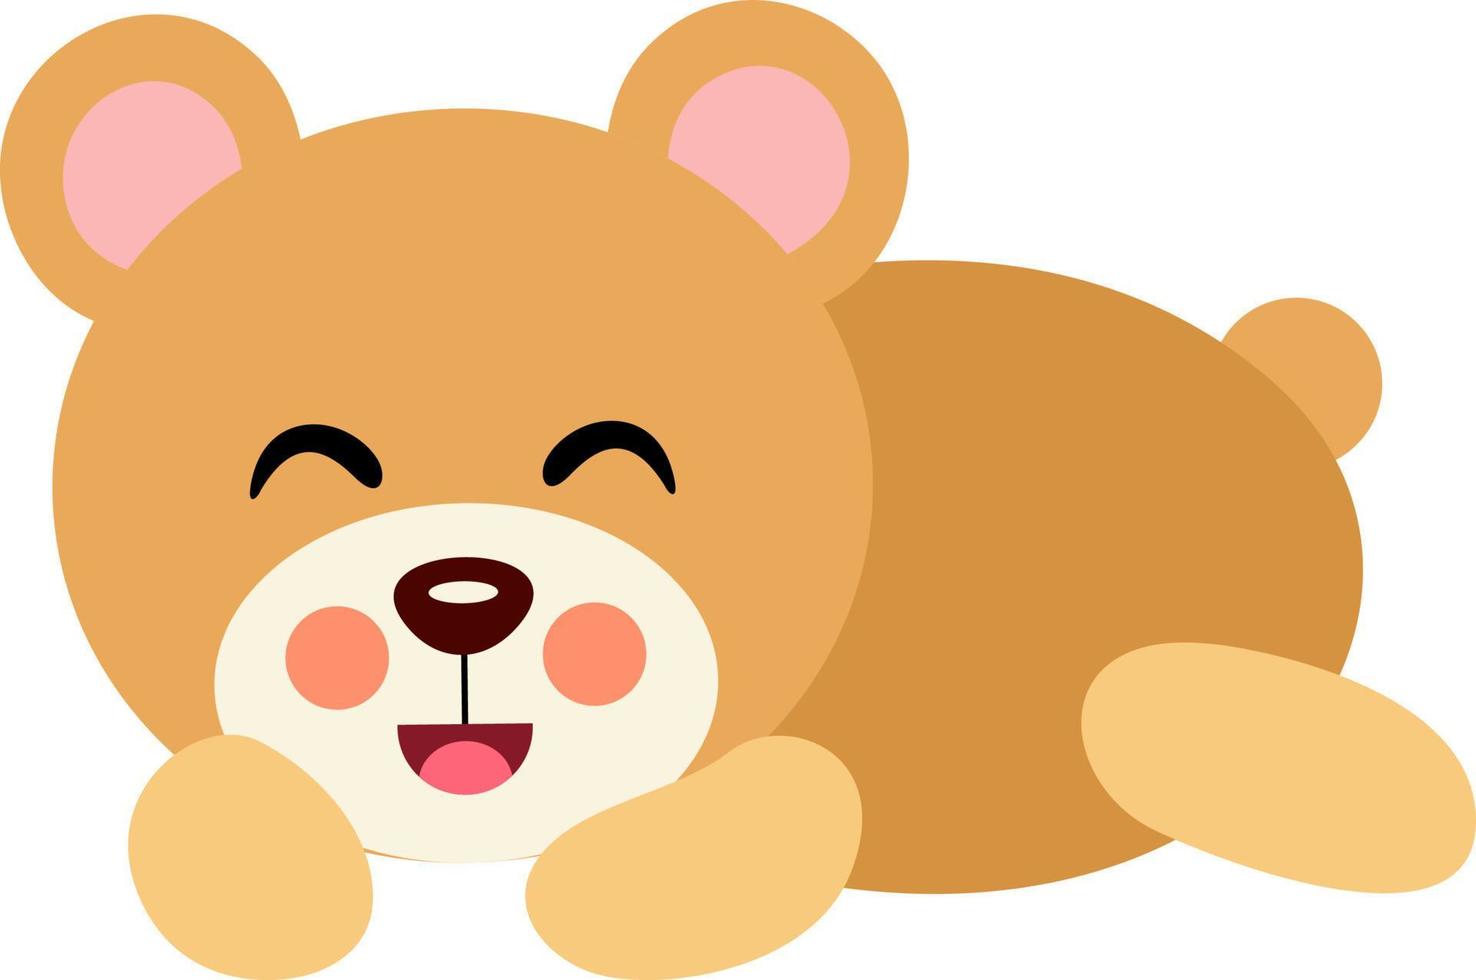 Cute brown teddy bear lying down vector